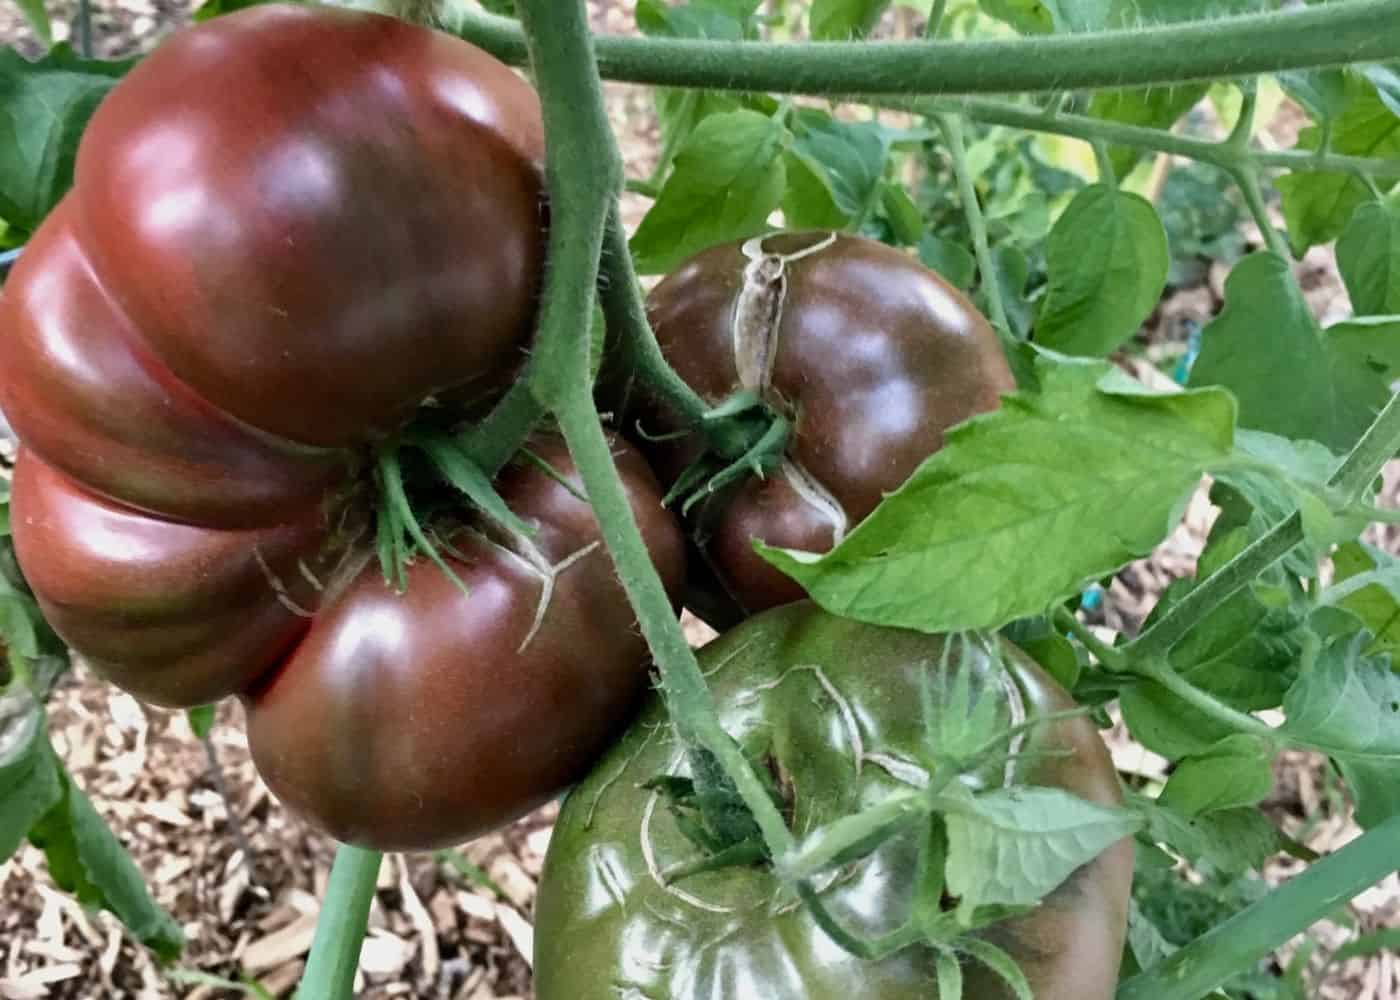 How to grow heirloom tomatoes - cherokee purple tomatoes on the vine